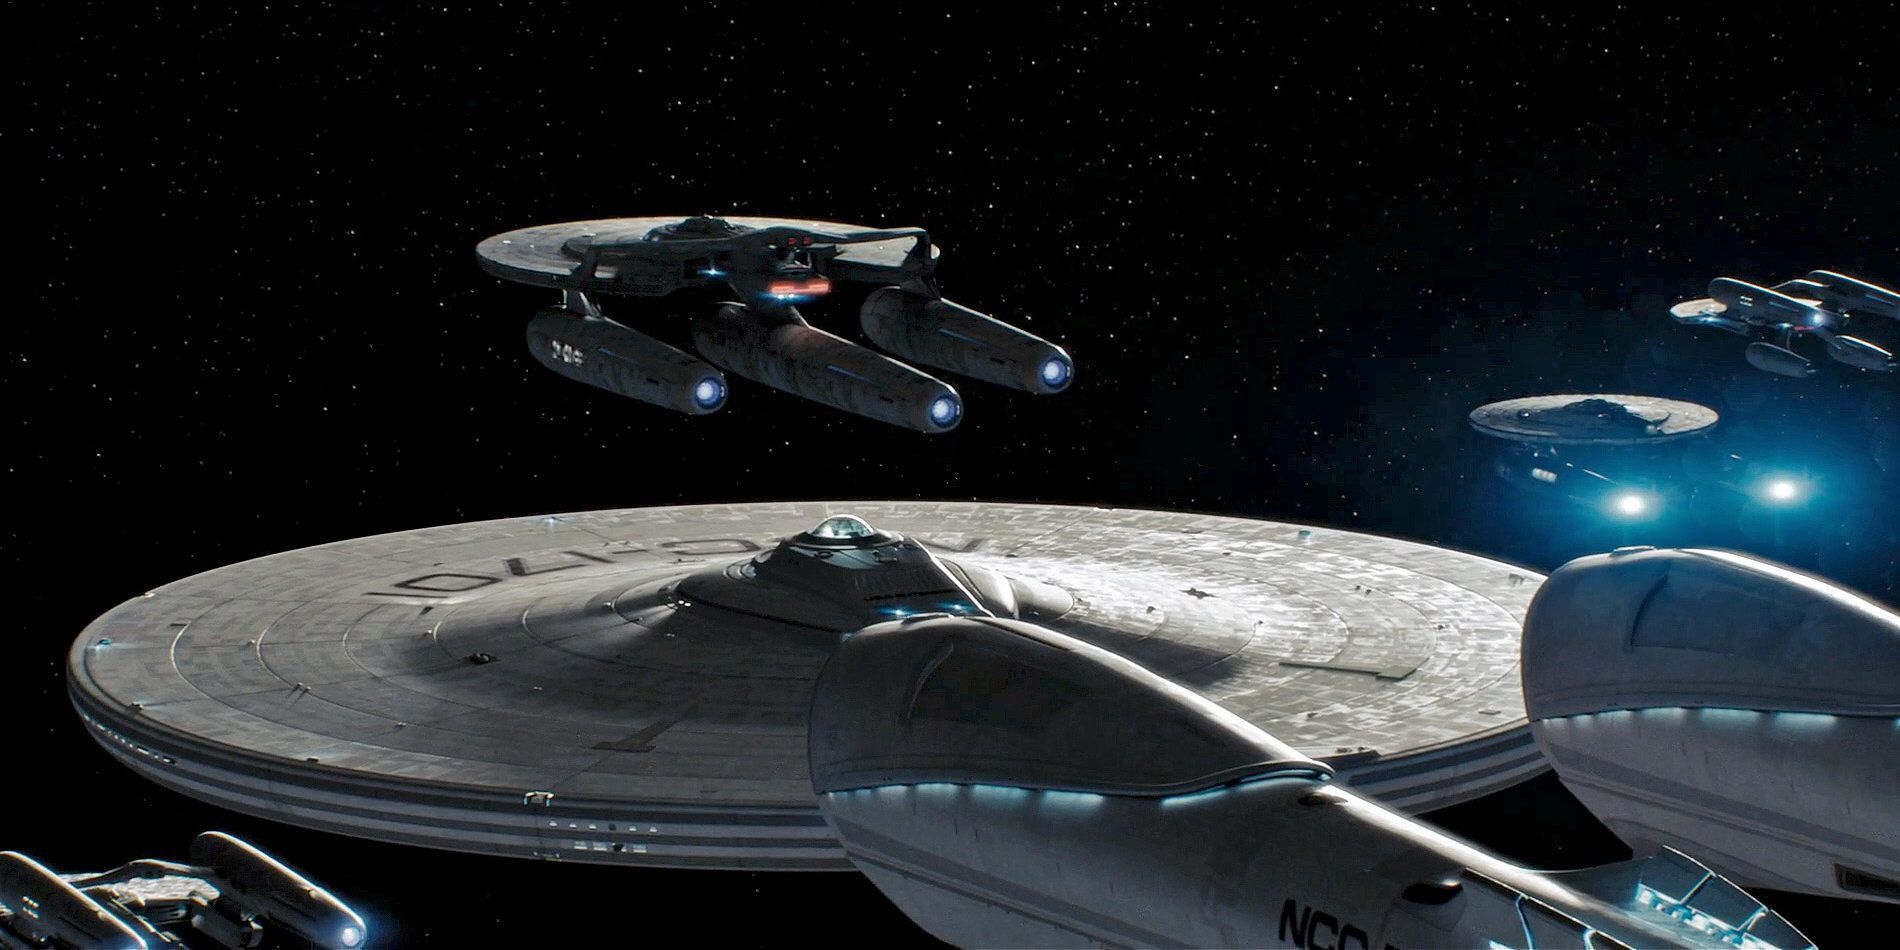 Starfleet armada leave for Vulcan